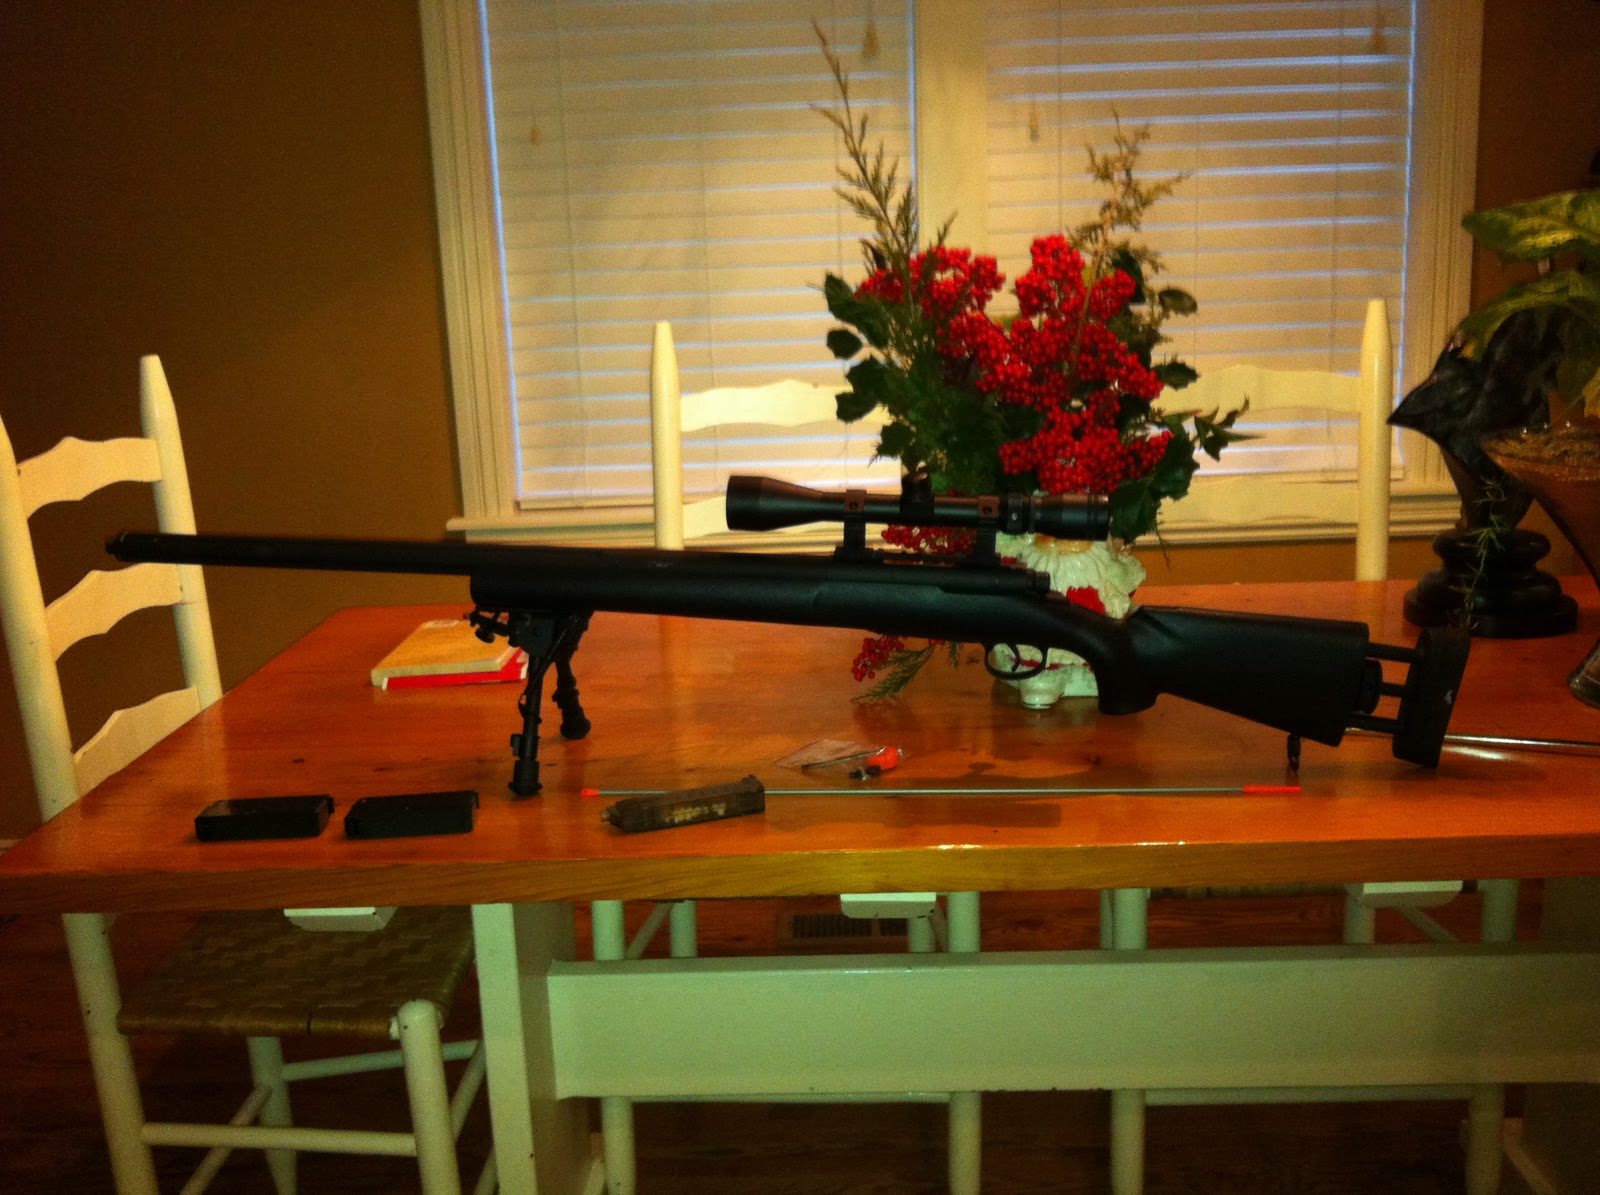 M28 Rifle